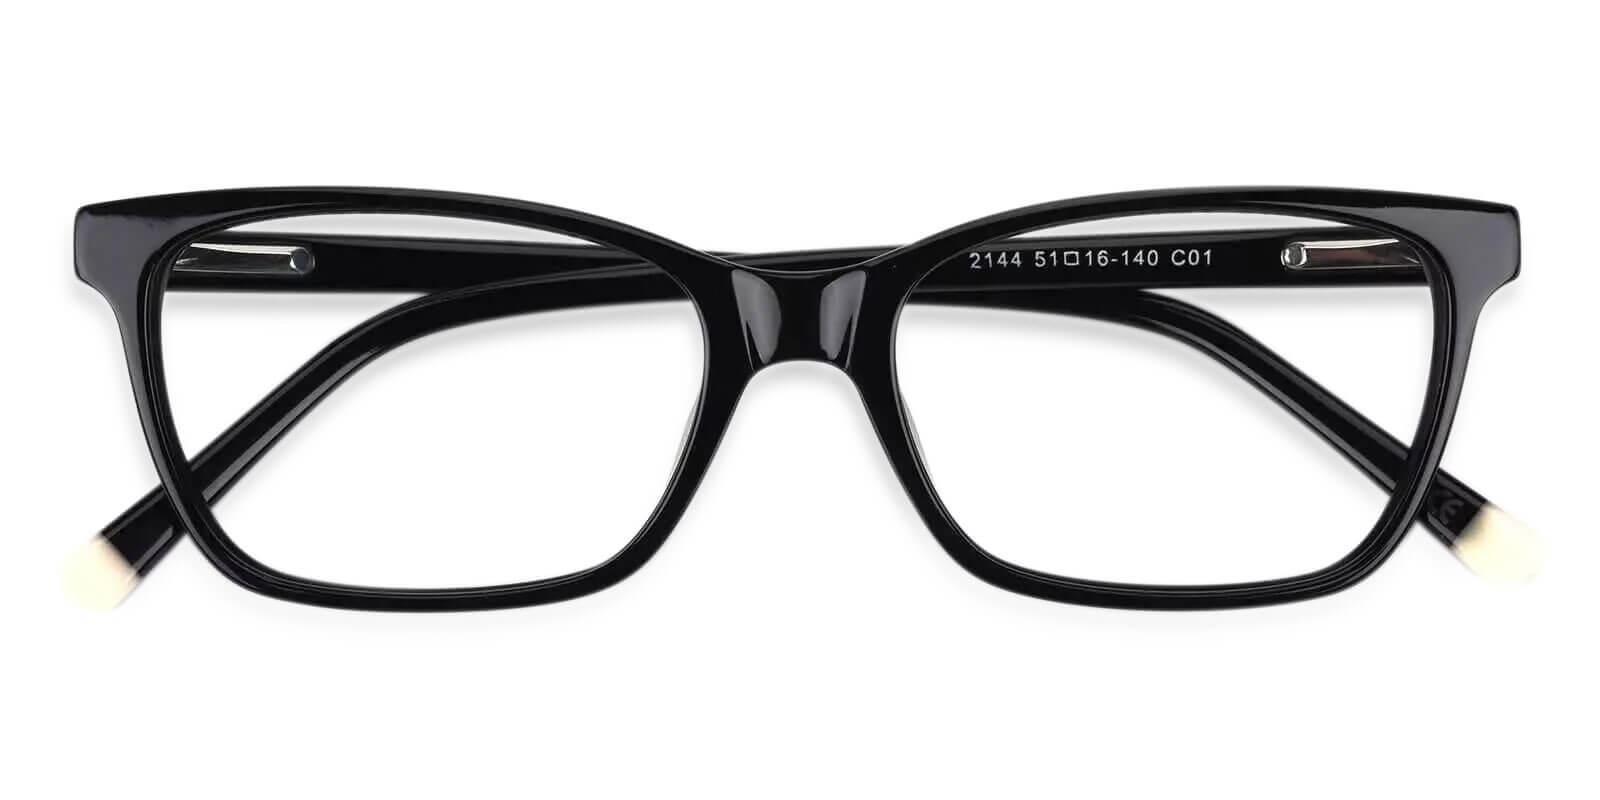 RingGold Black Acetate Eyeglasses , SpringHinges , UniversalBridgeFit Frames from ABBE Glasses